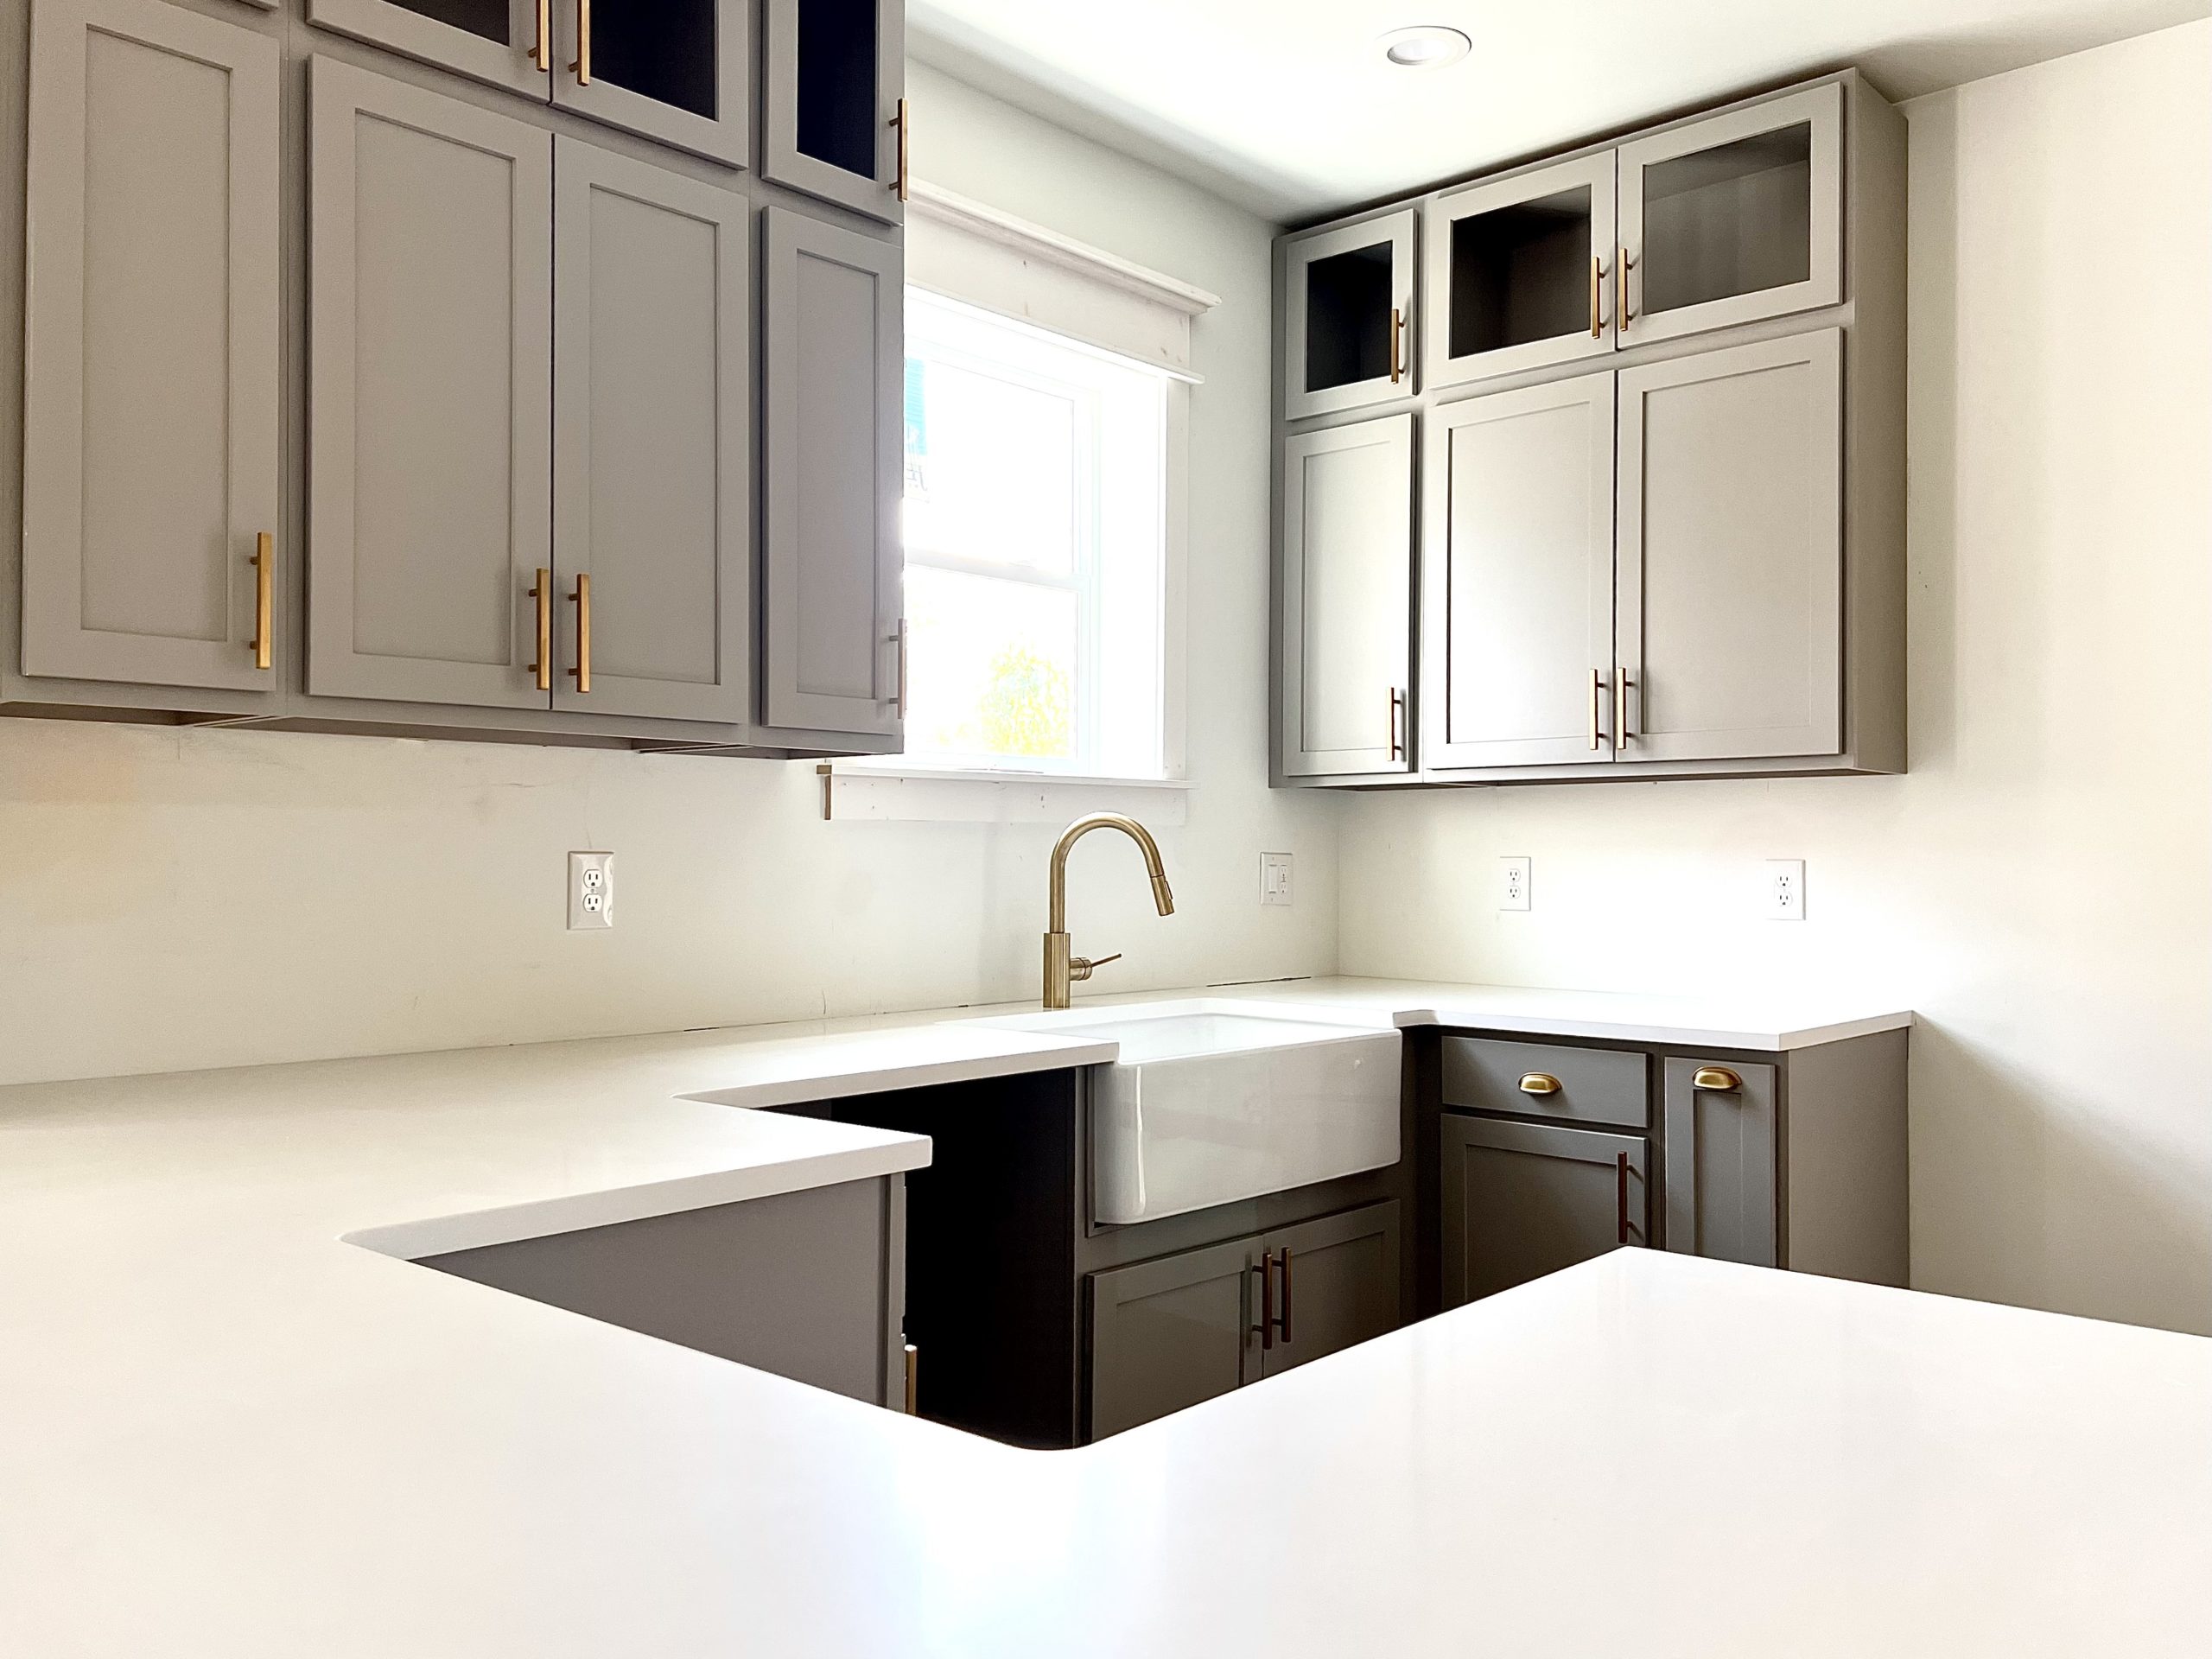 Grant Street Denver Colorado Custom Home Finishes Home Addition Kitchen Remodel